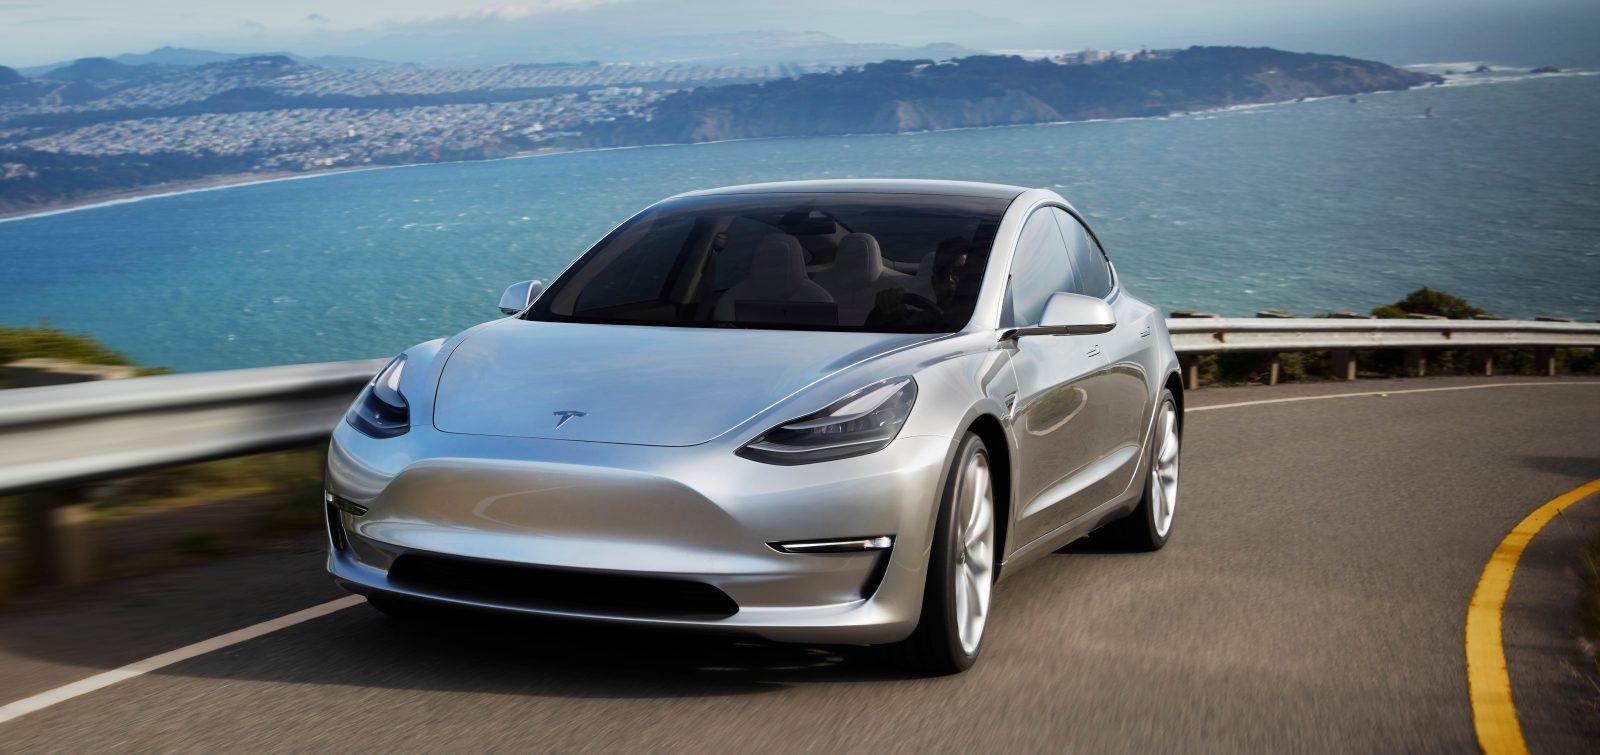 Mẫu xe điện Tesla Model 3. Ảnh: internet